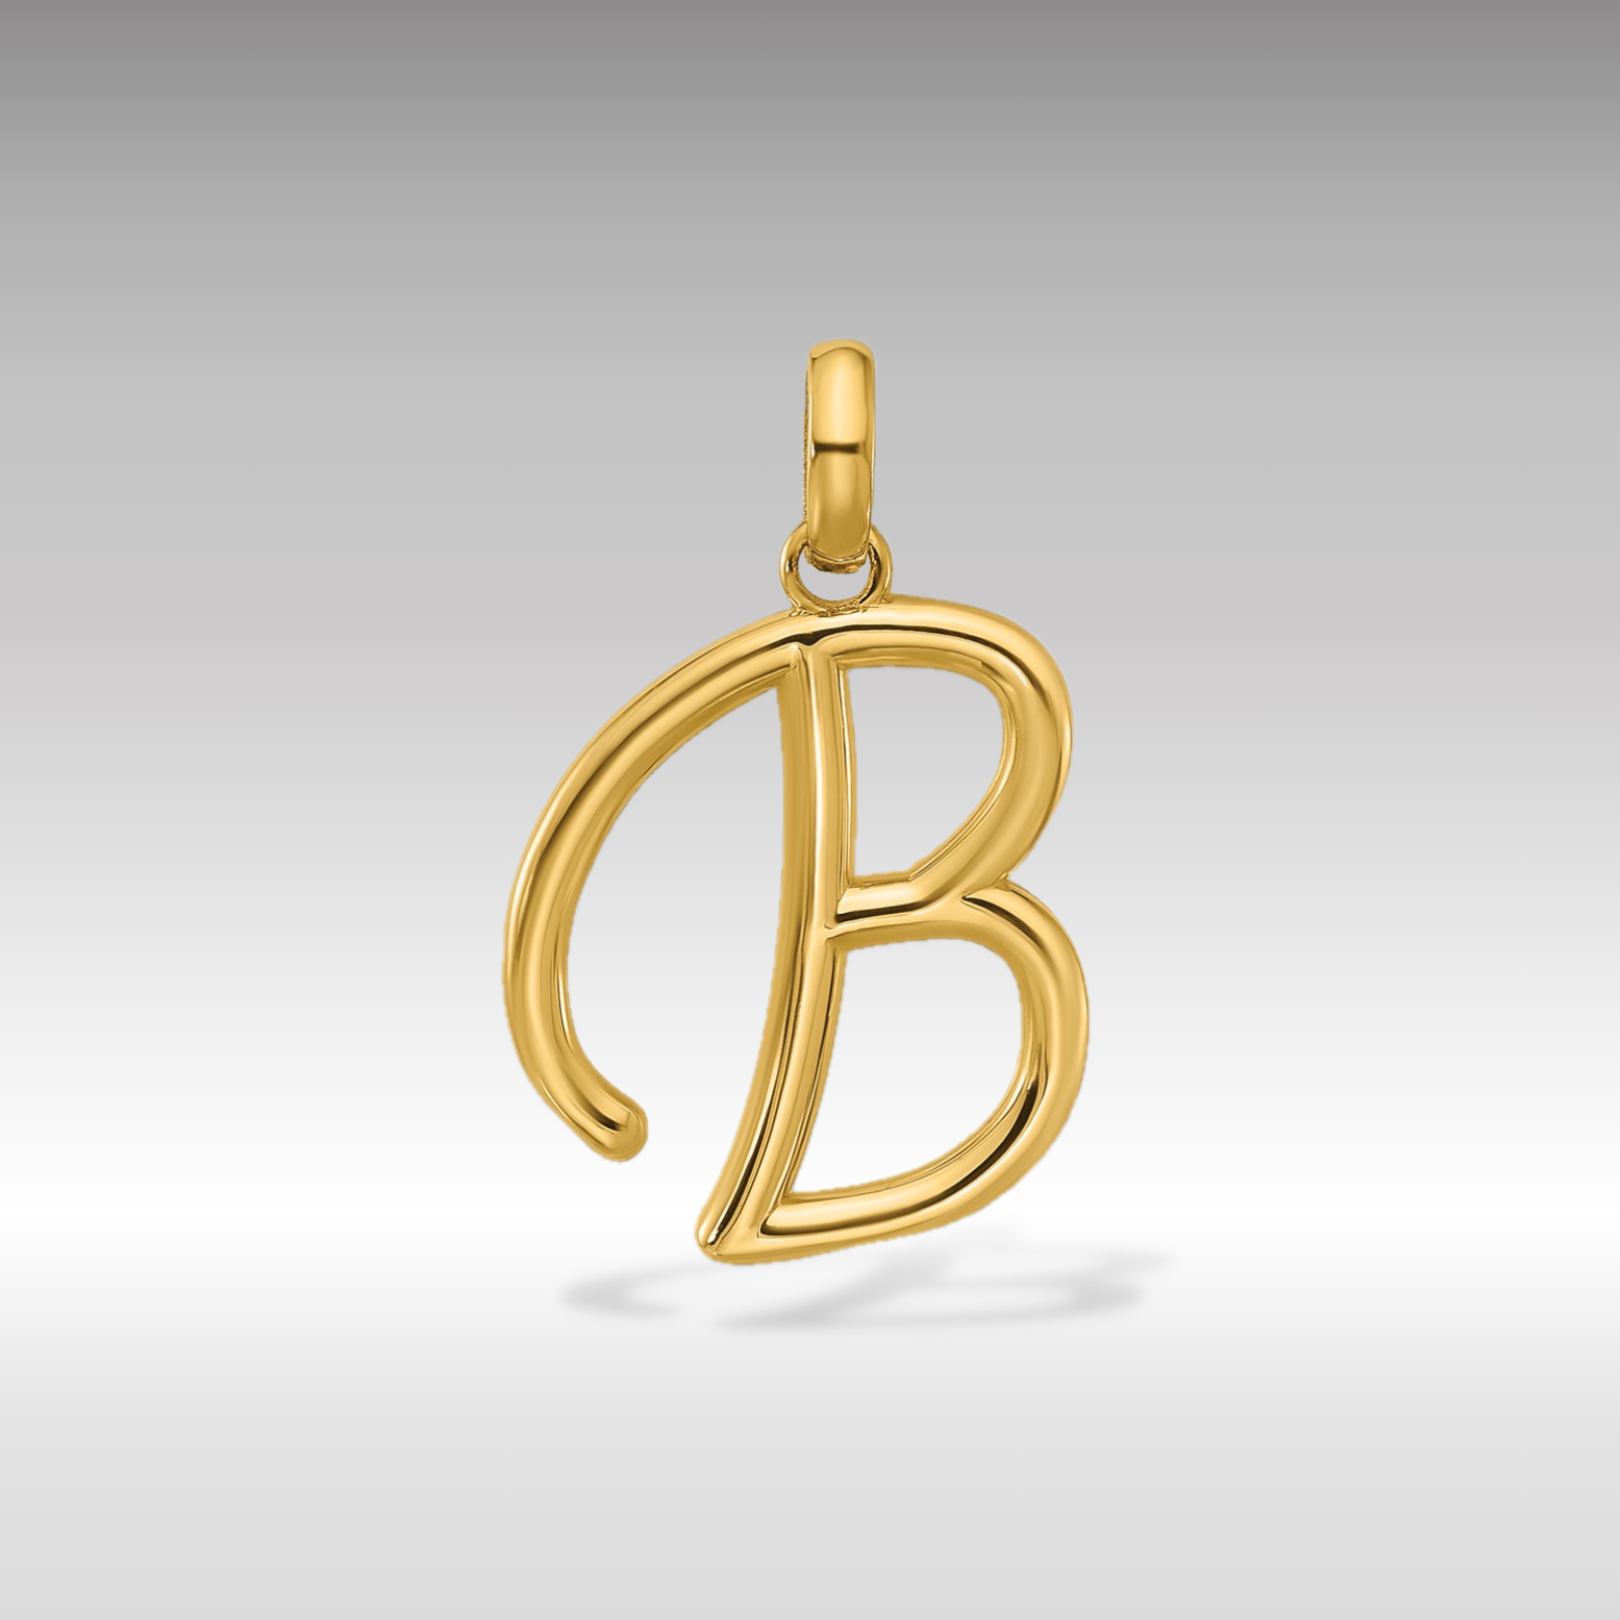 14K Gold Fancy Letter 'B' Charm Pendant - Charlie & Co. Jewelry